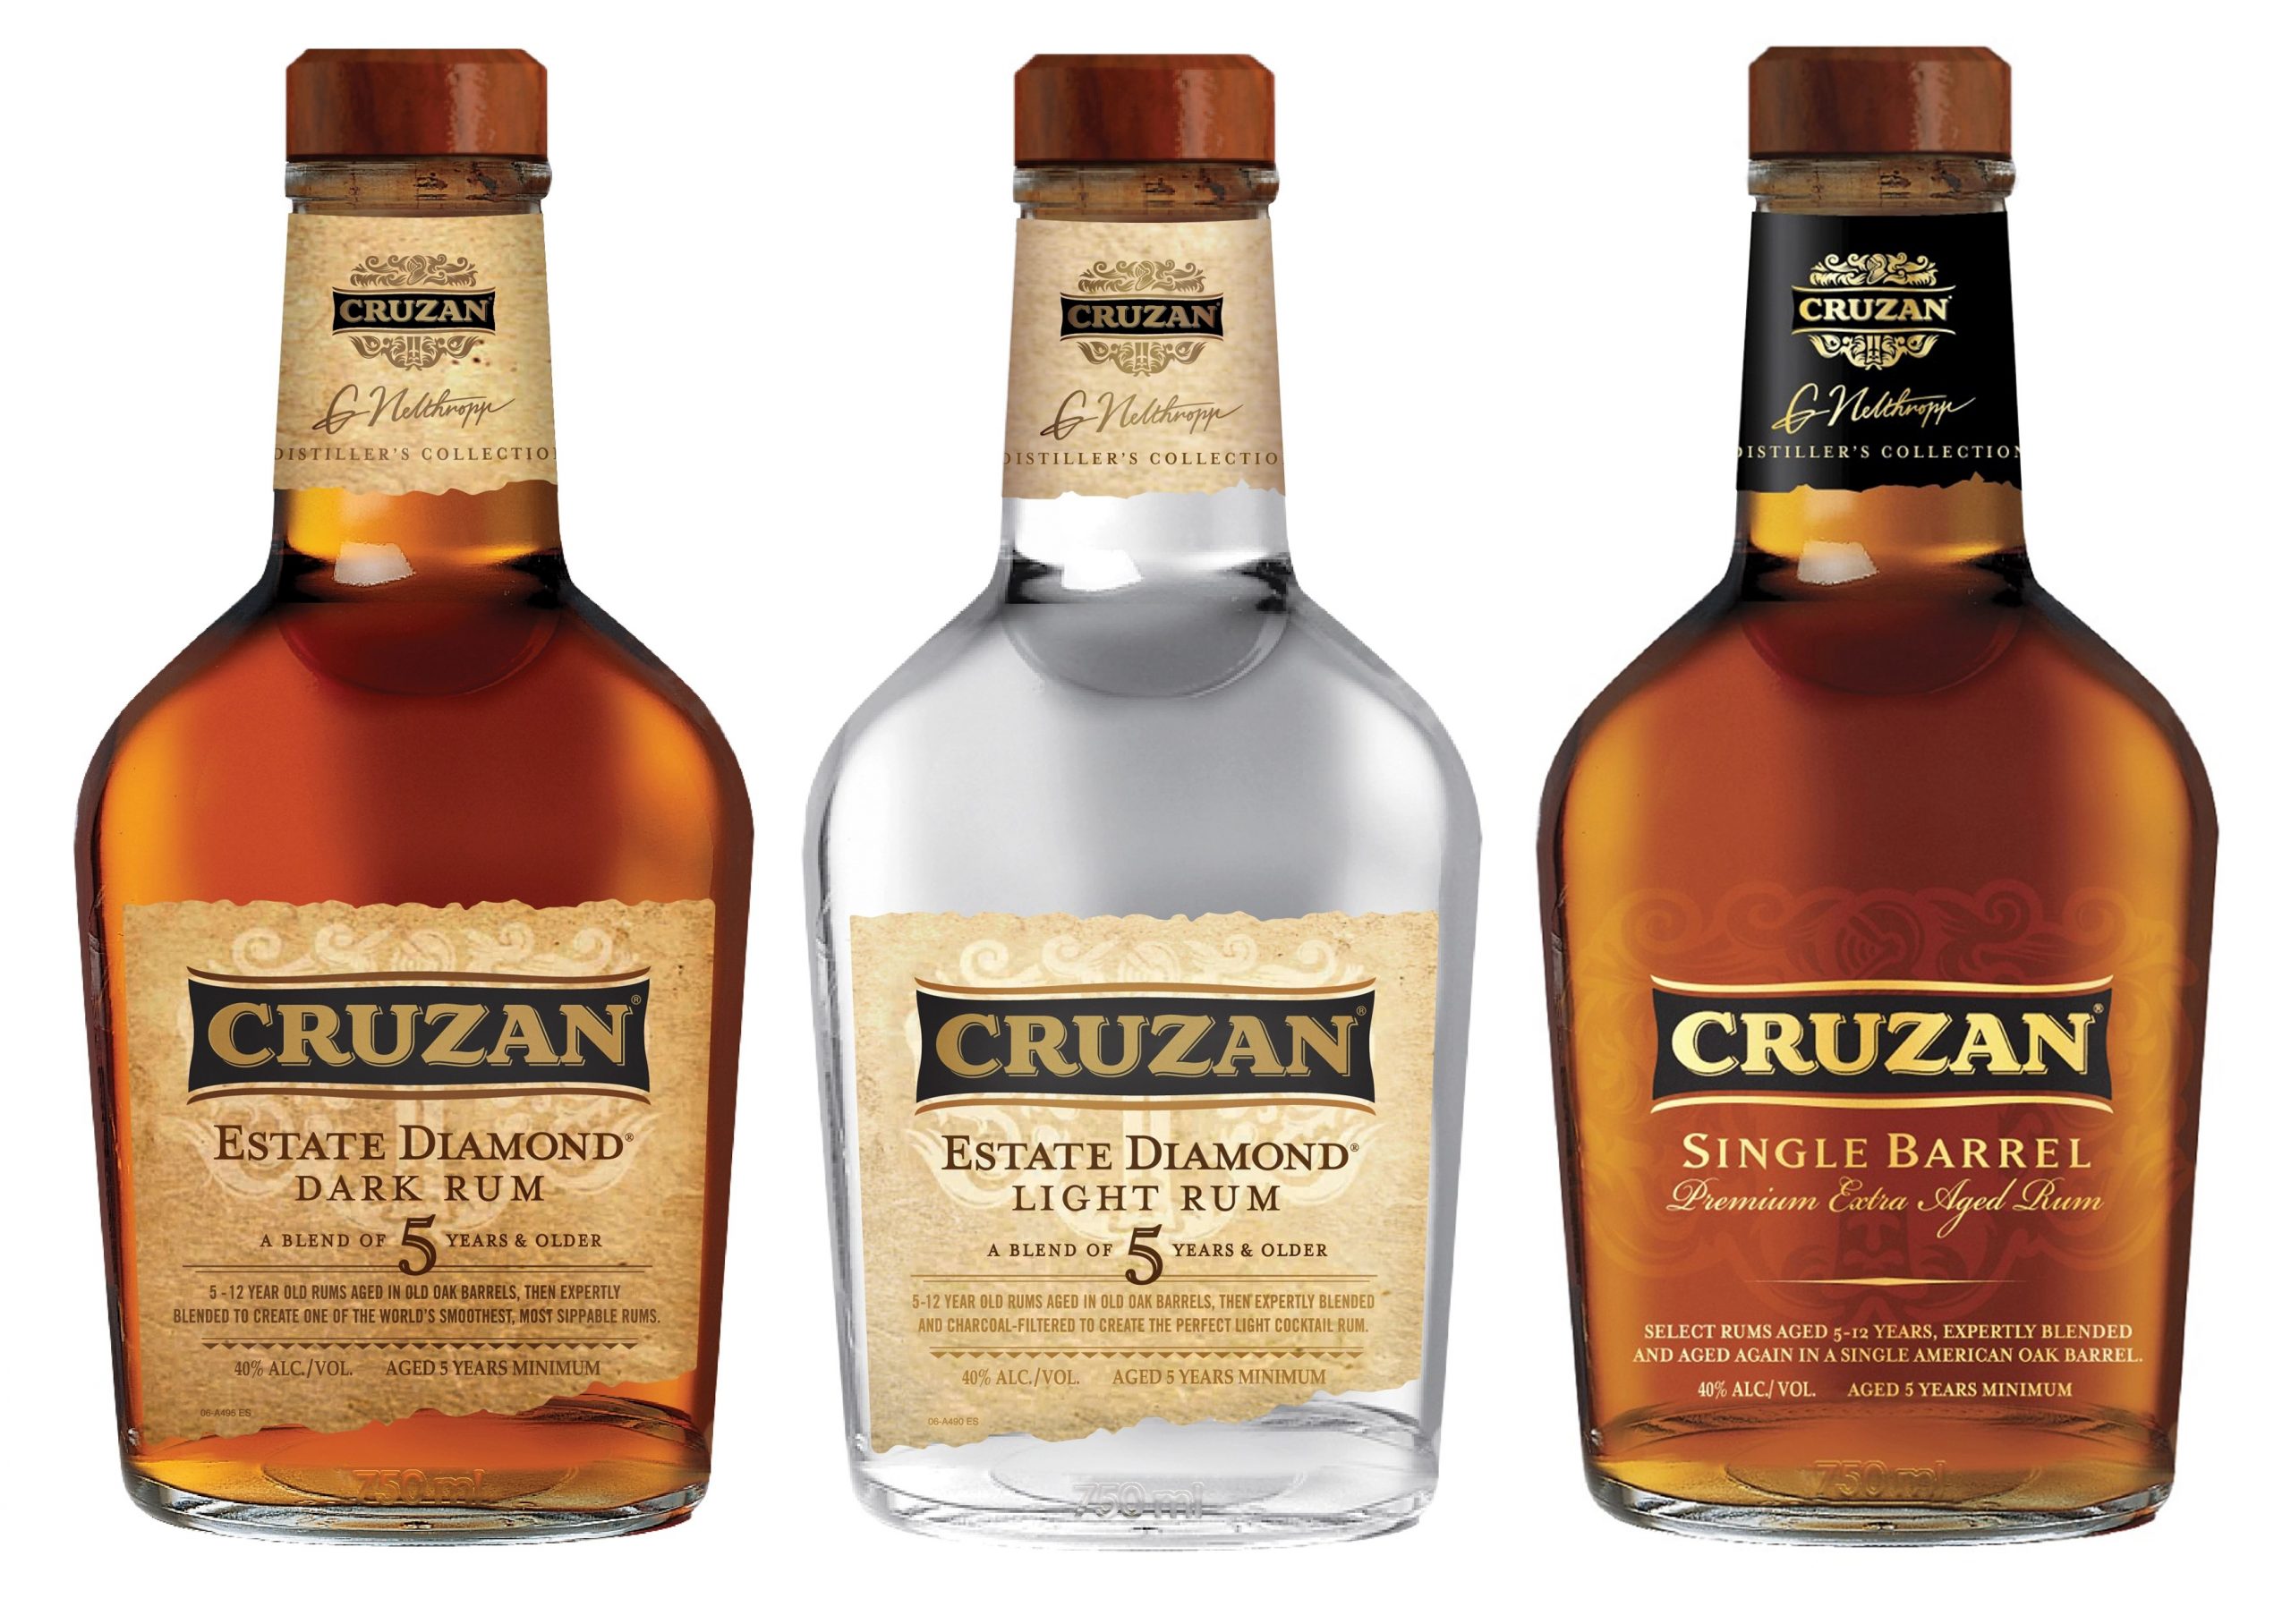 Review: Cruzan Distiller